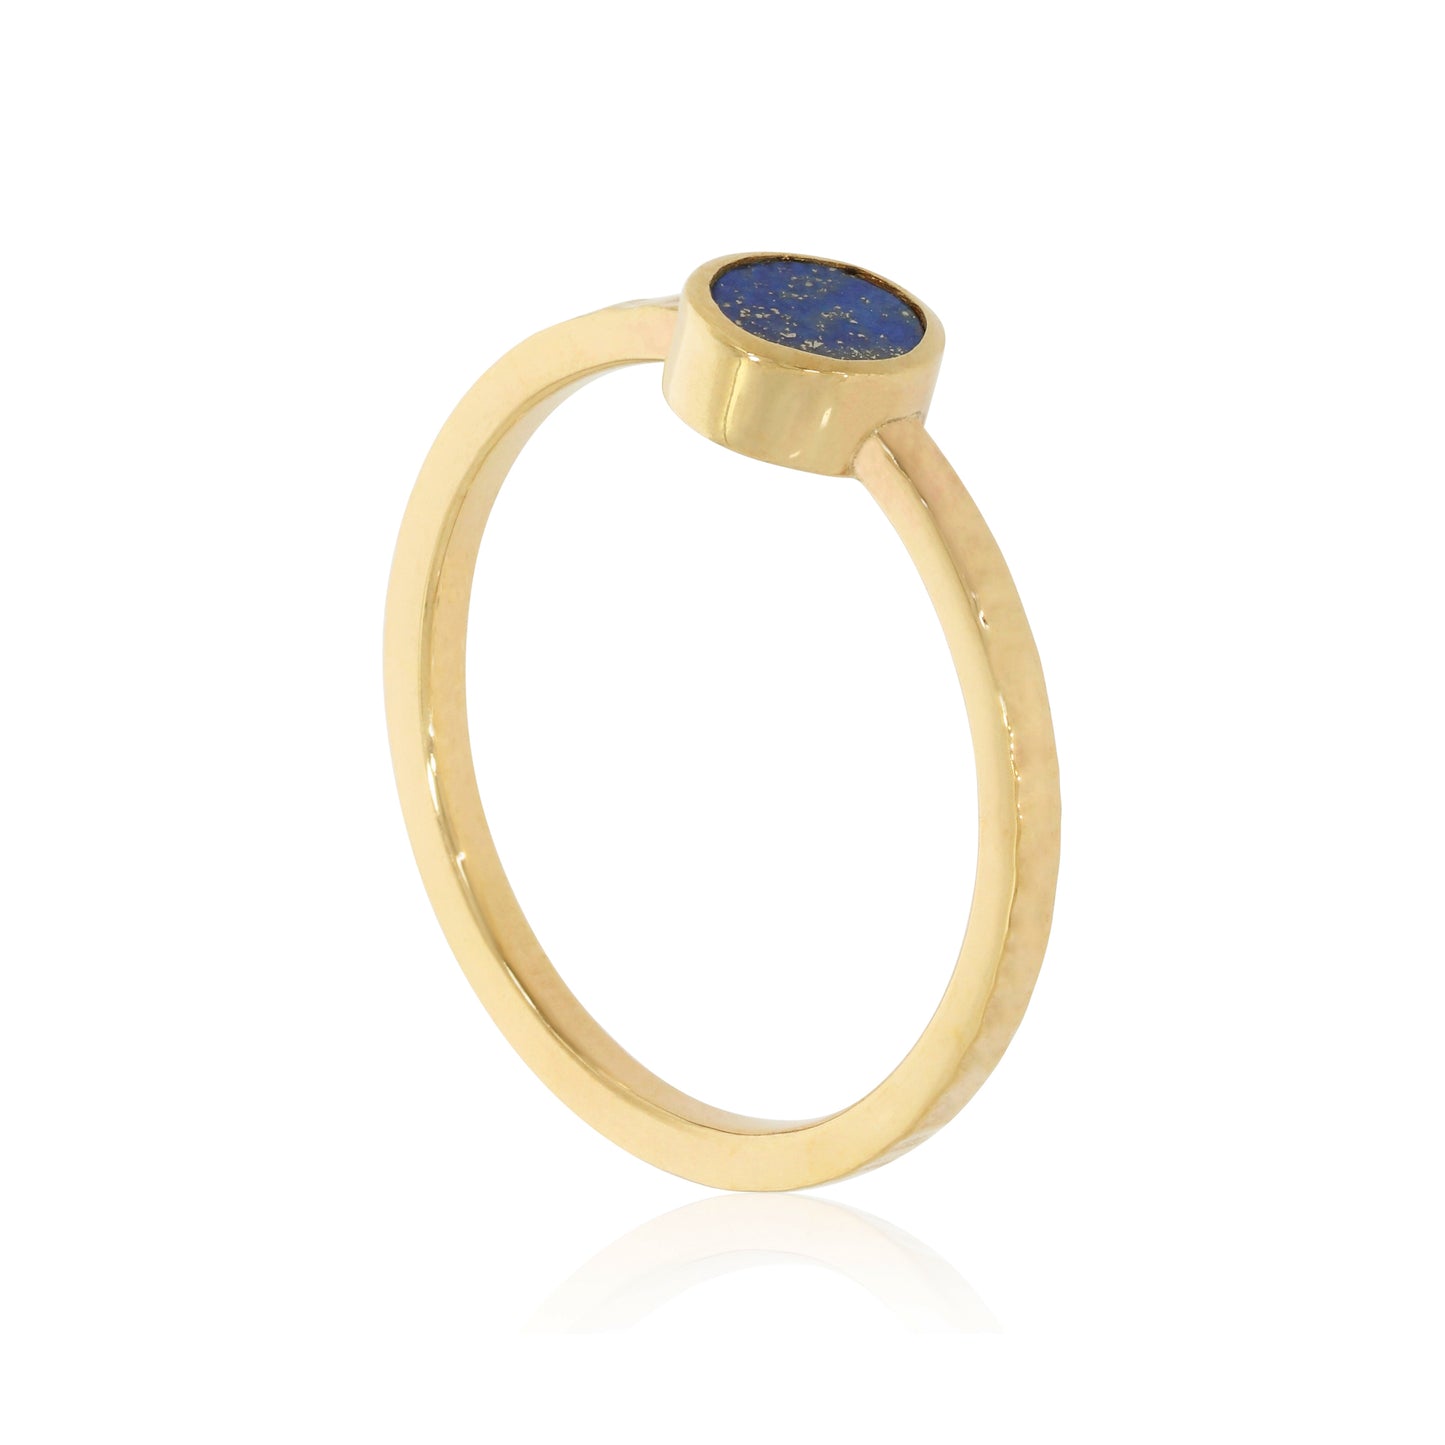 Scintilla Ring set with Lapis Lazuli